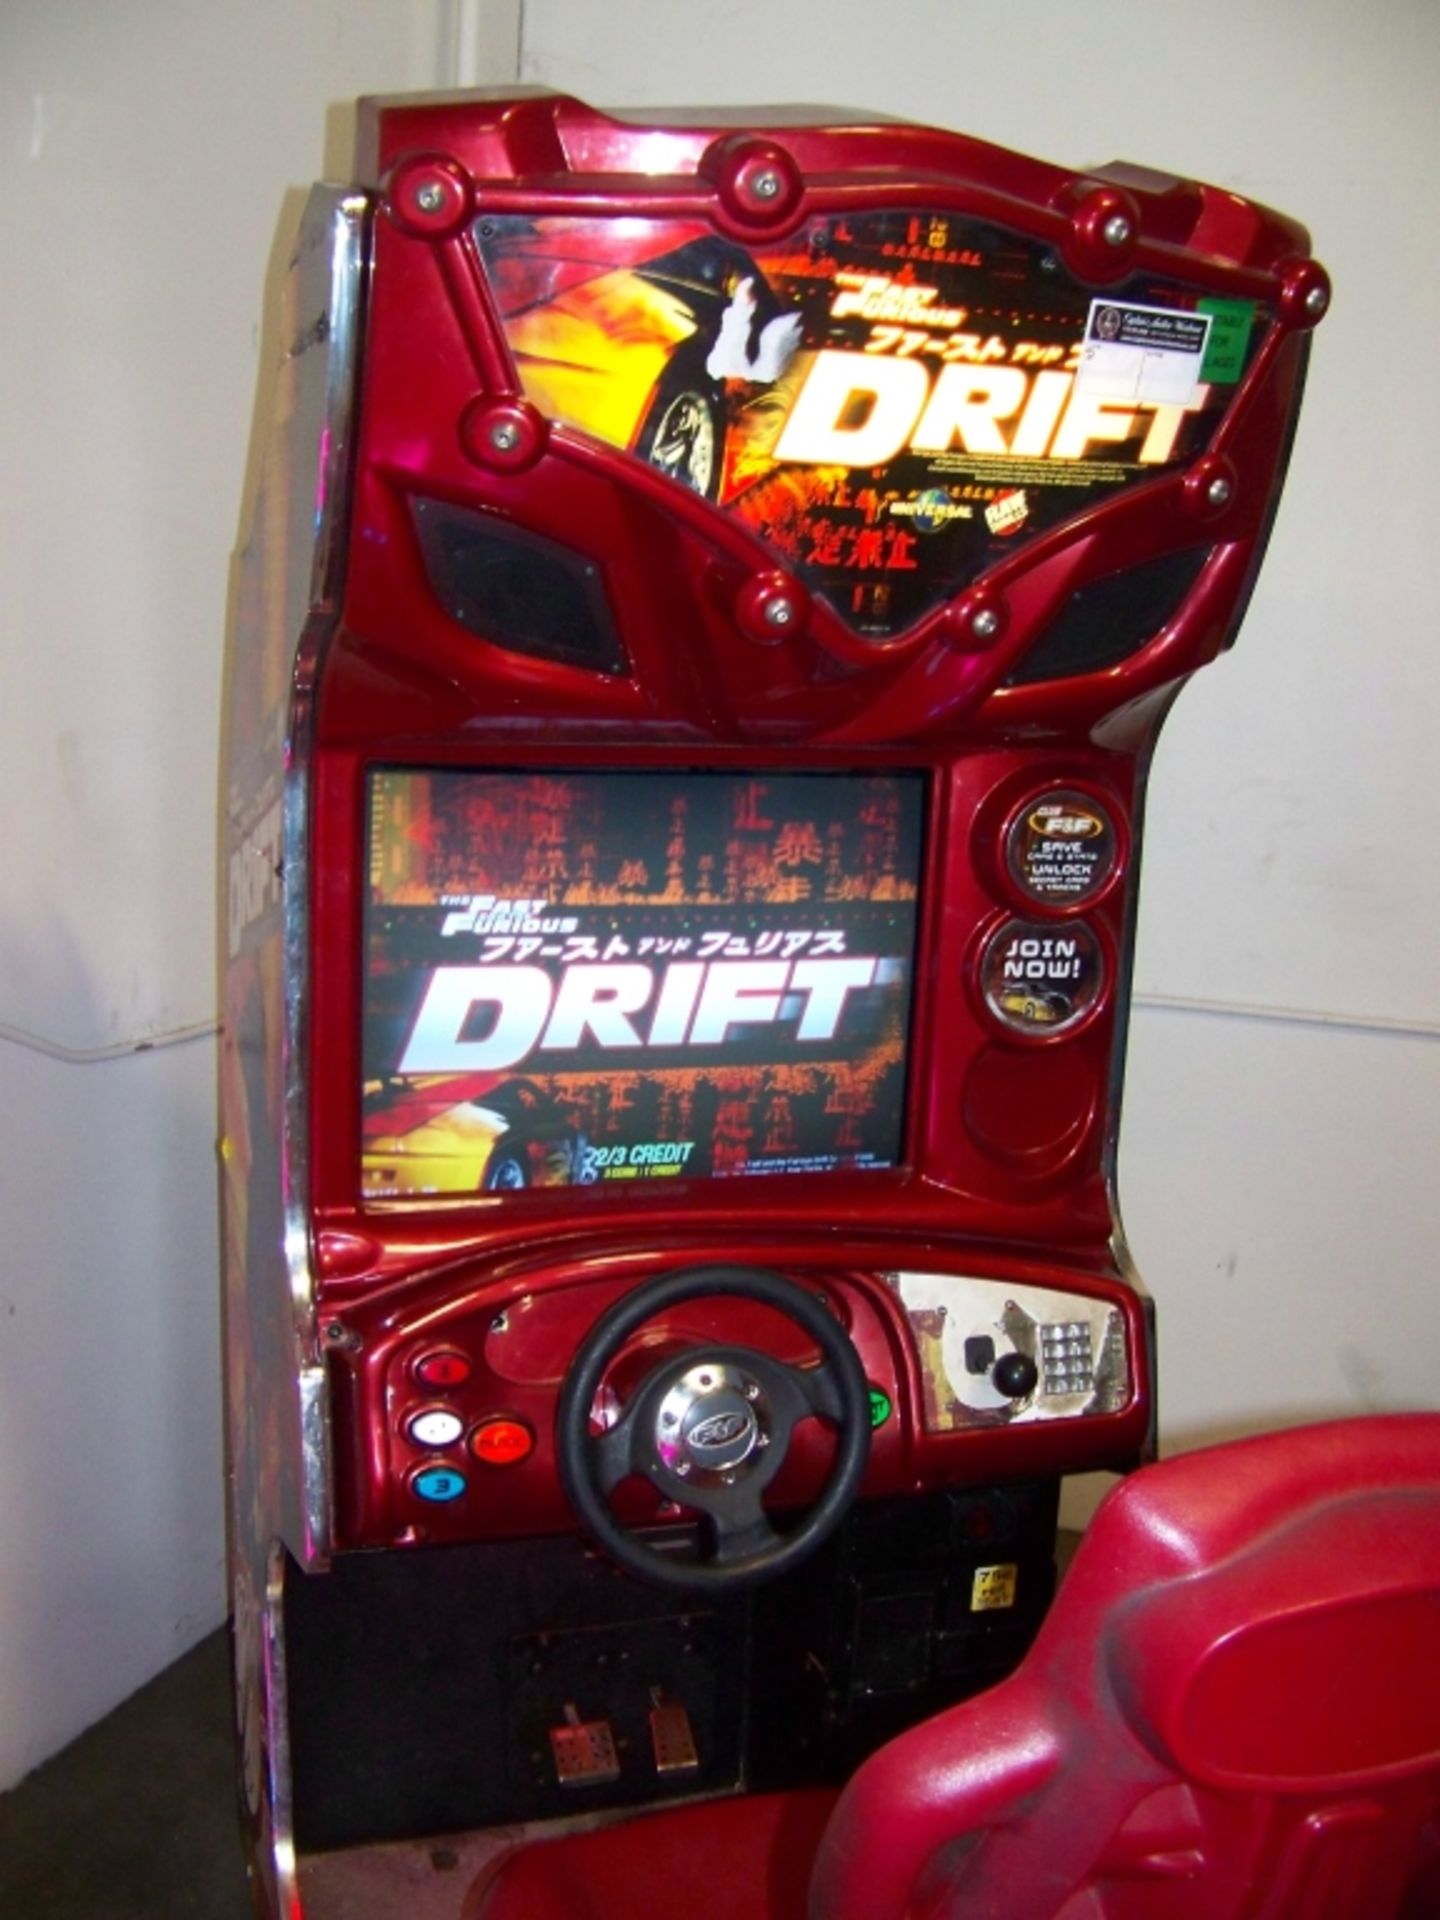 DRIFT FAST & FURIOUS DEDICATED RACING ARCADE GAME - Image 7 of 7